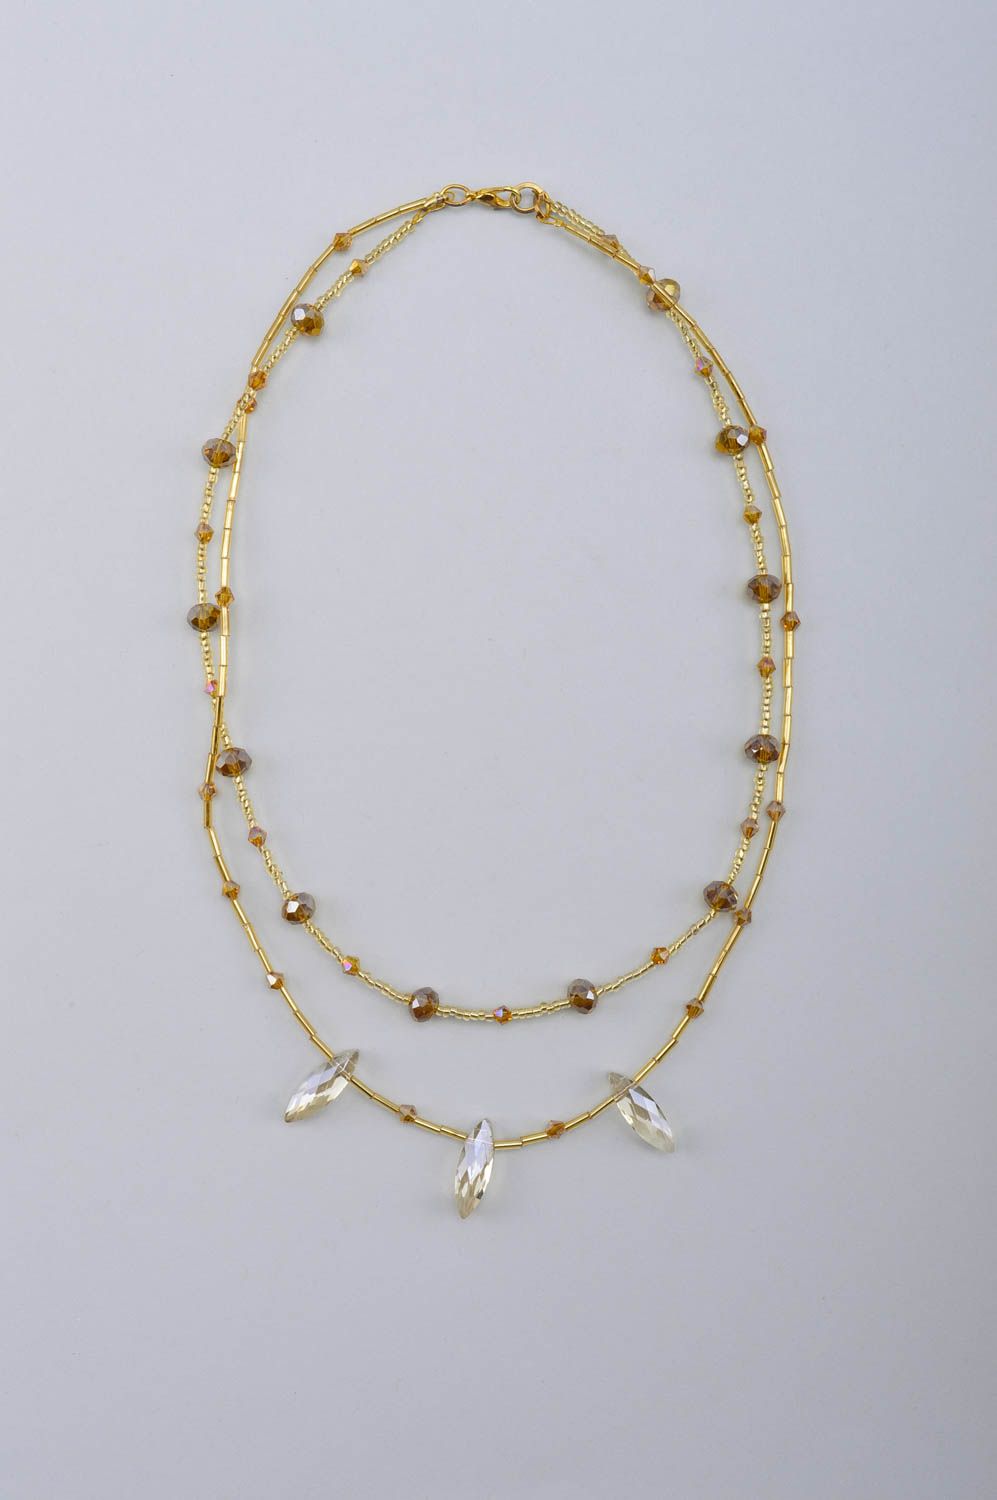 Unusual handmade beaded necklace design artisan jewelry fashion accessories photo 2